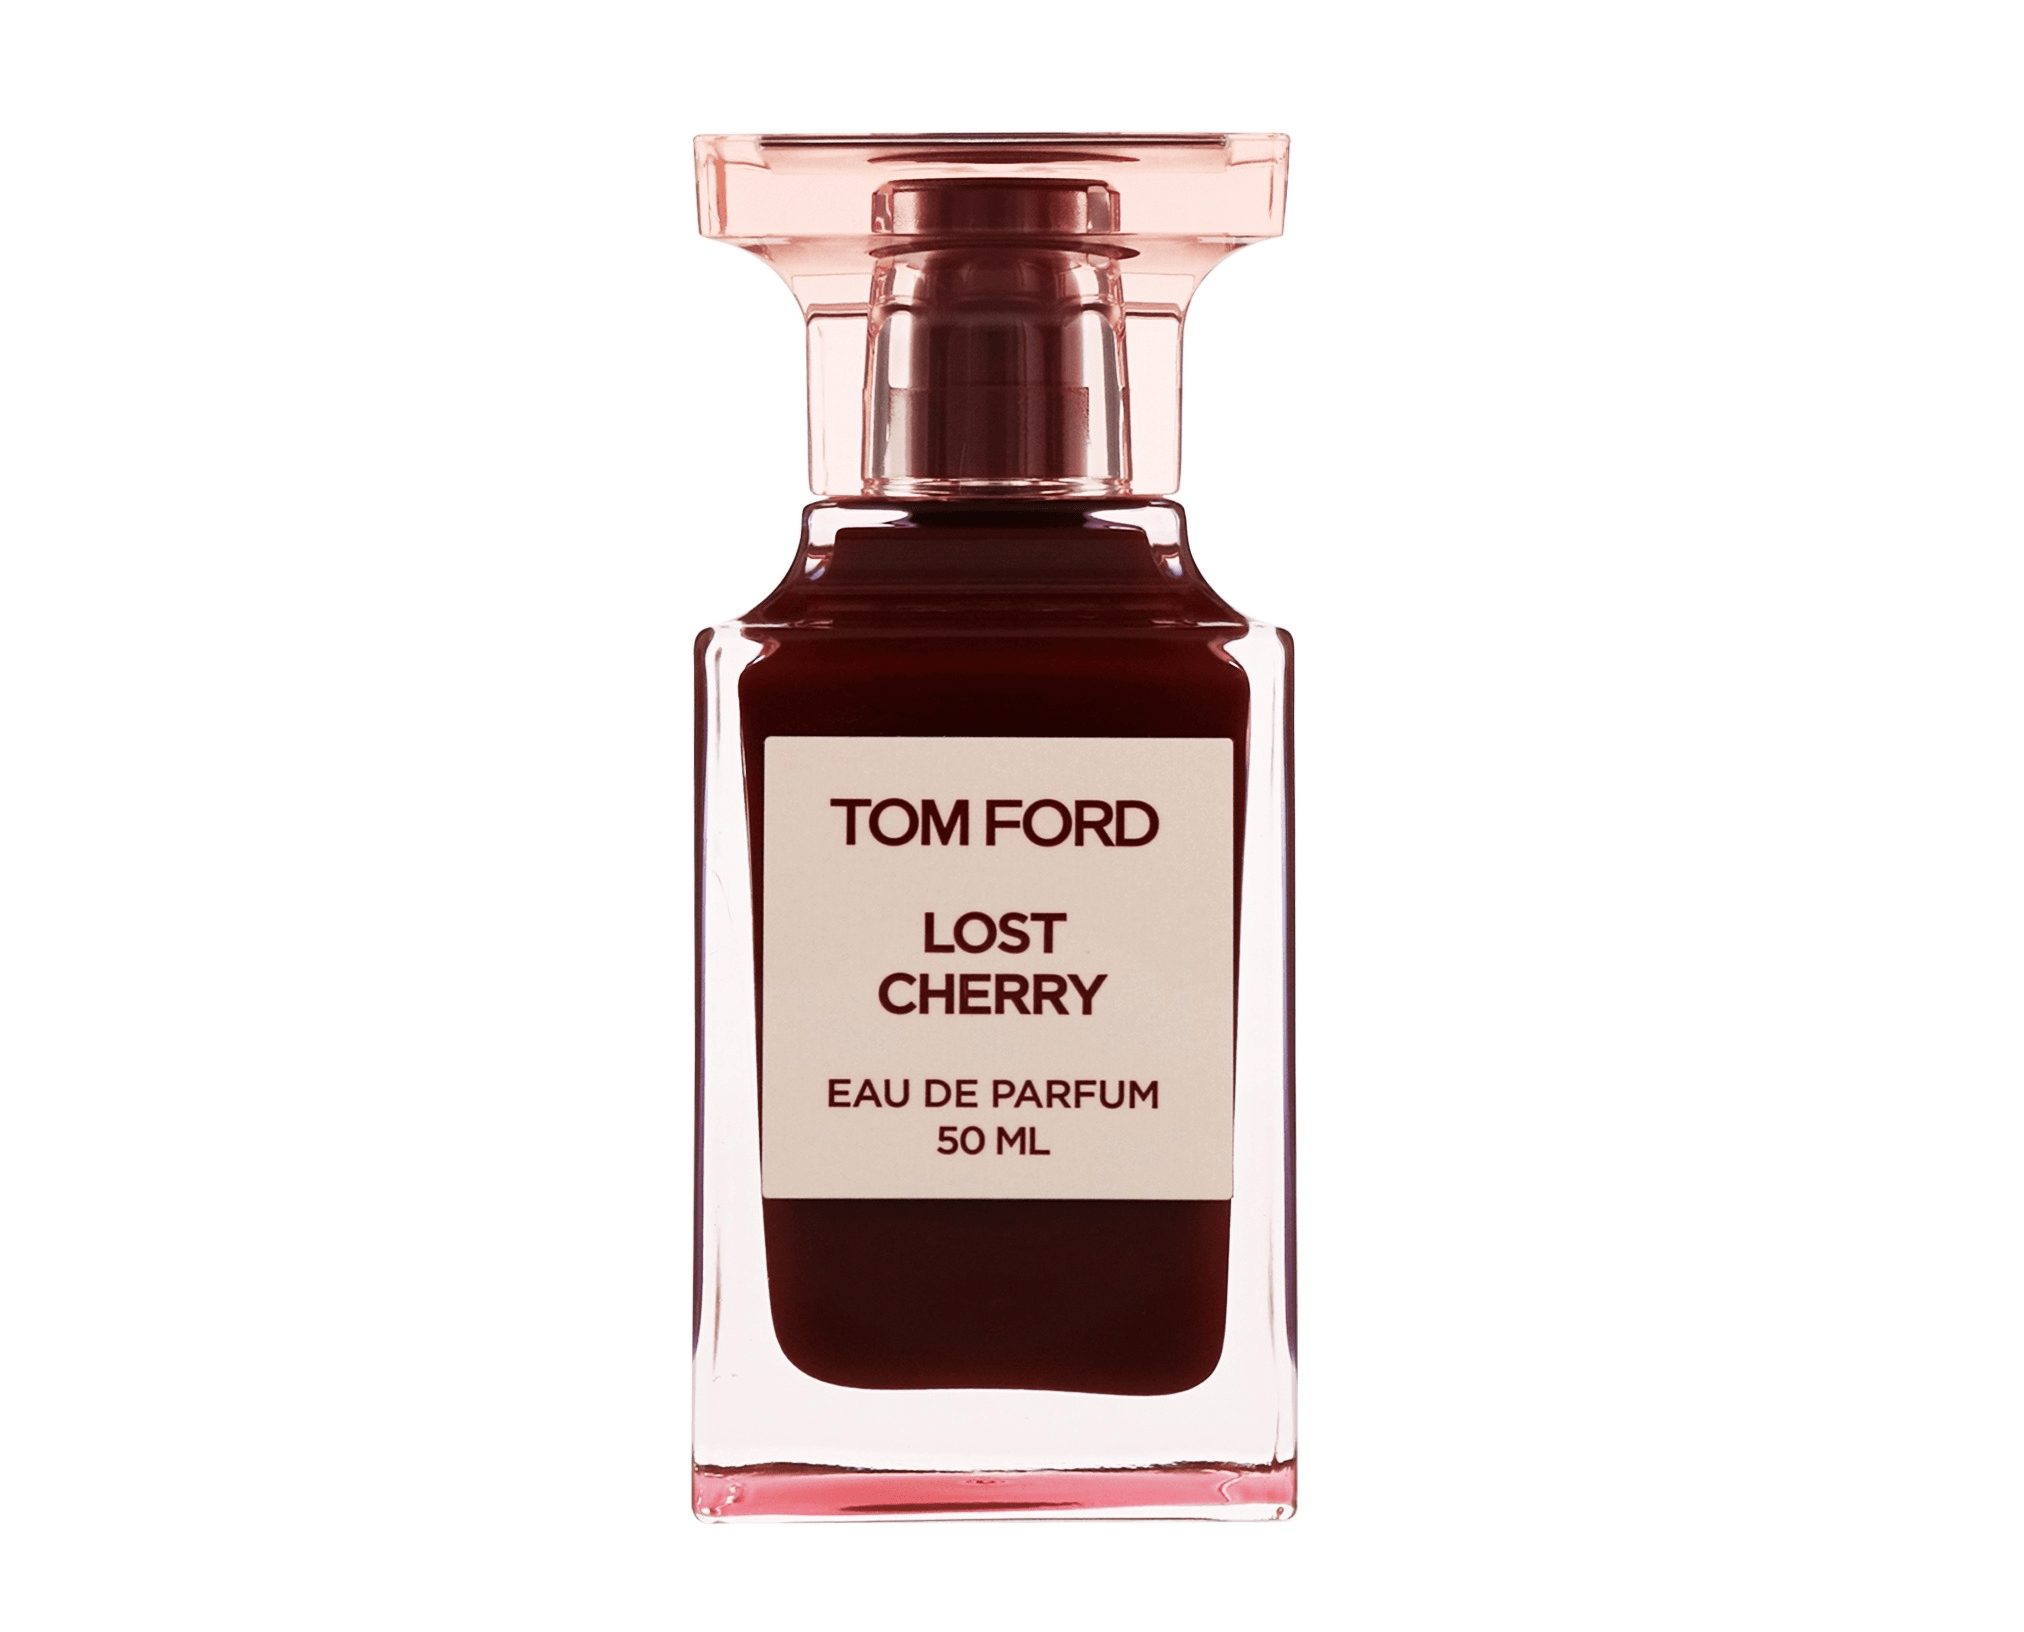 Tom Ford - Lost Cherry, (トムフォード - ロスト チェリー)